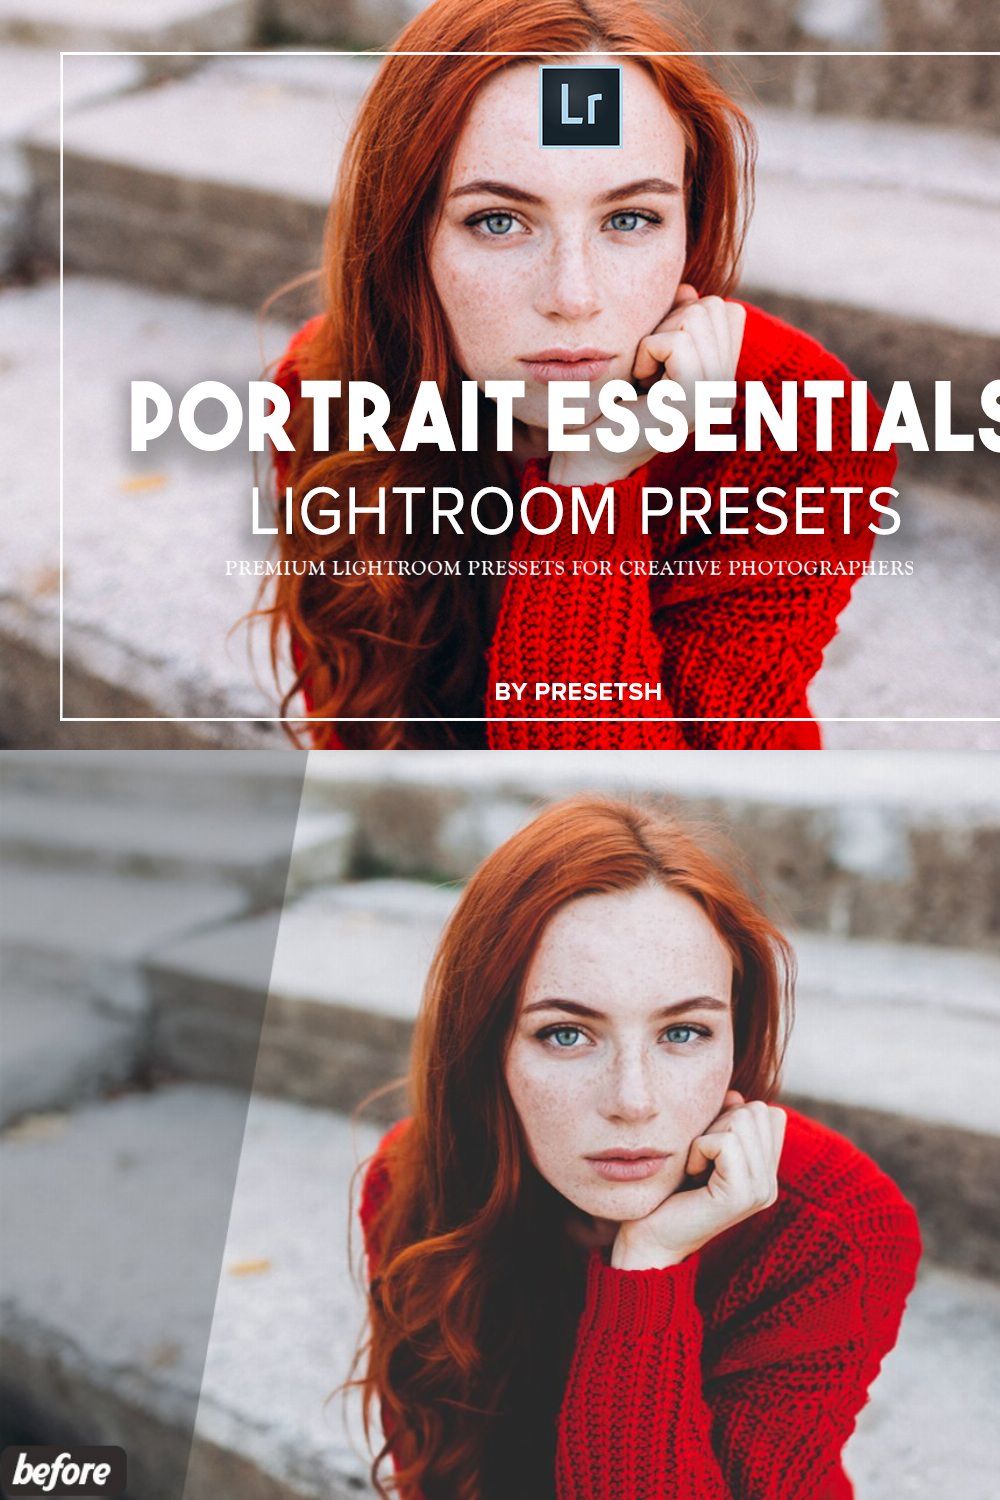 Essential Portrait lightroom presets pinterest preview image.